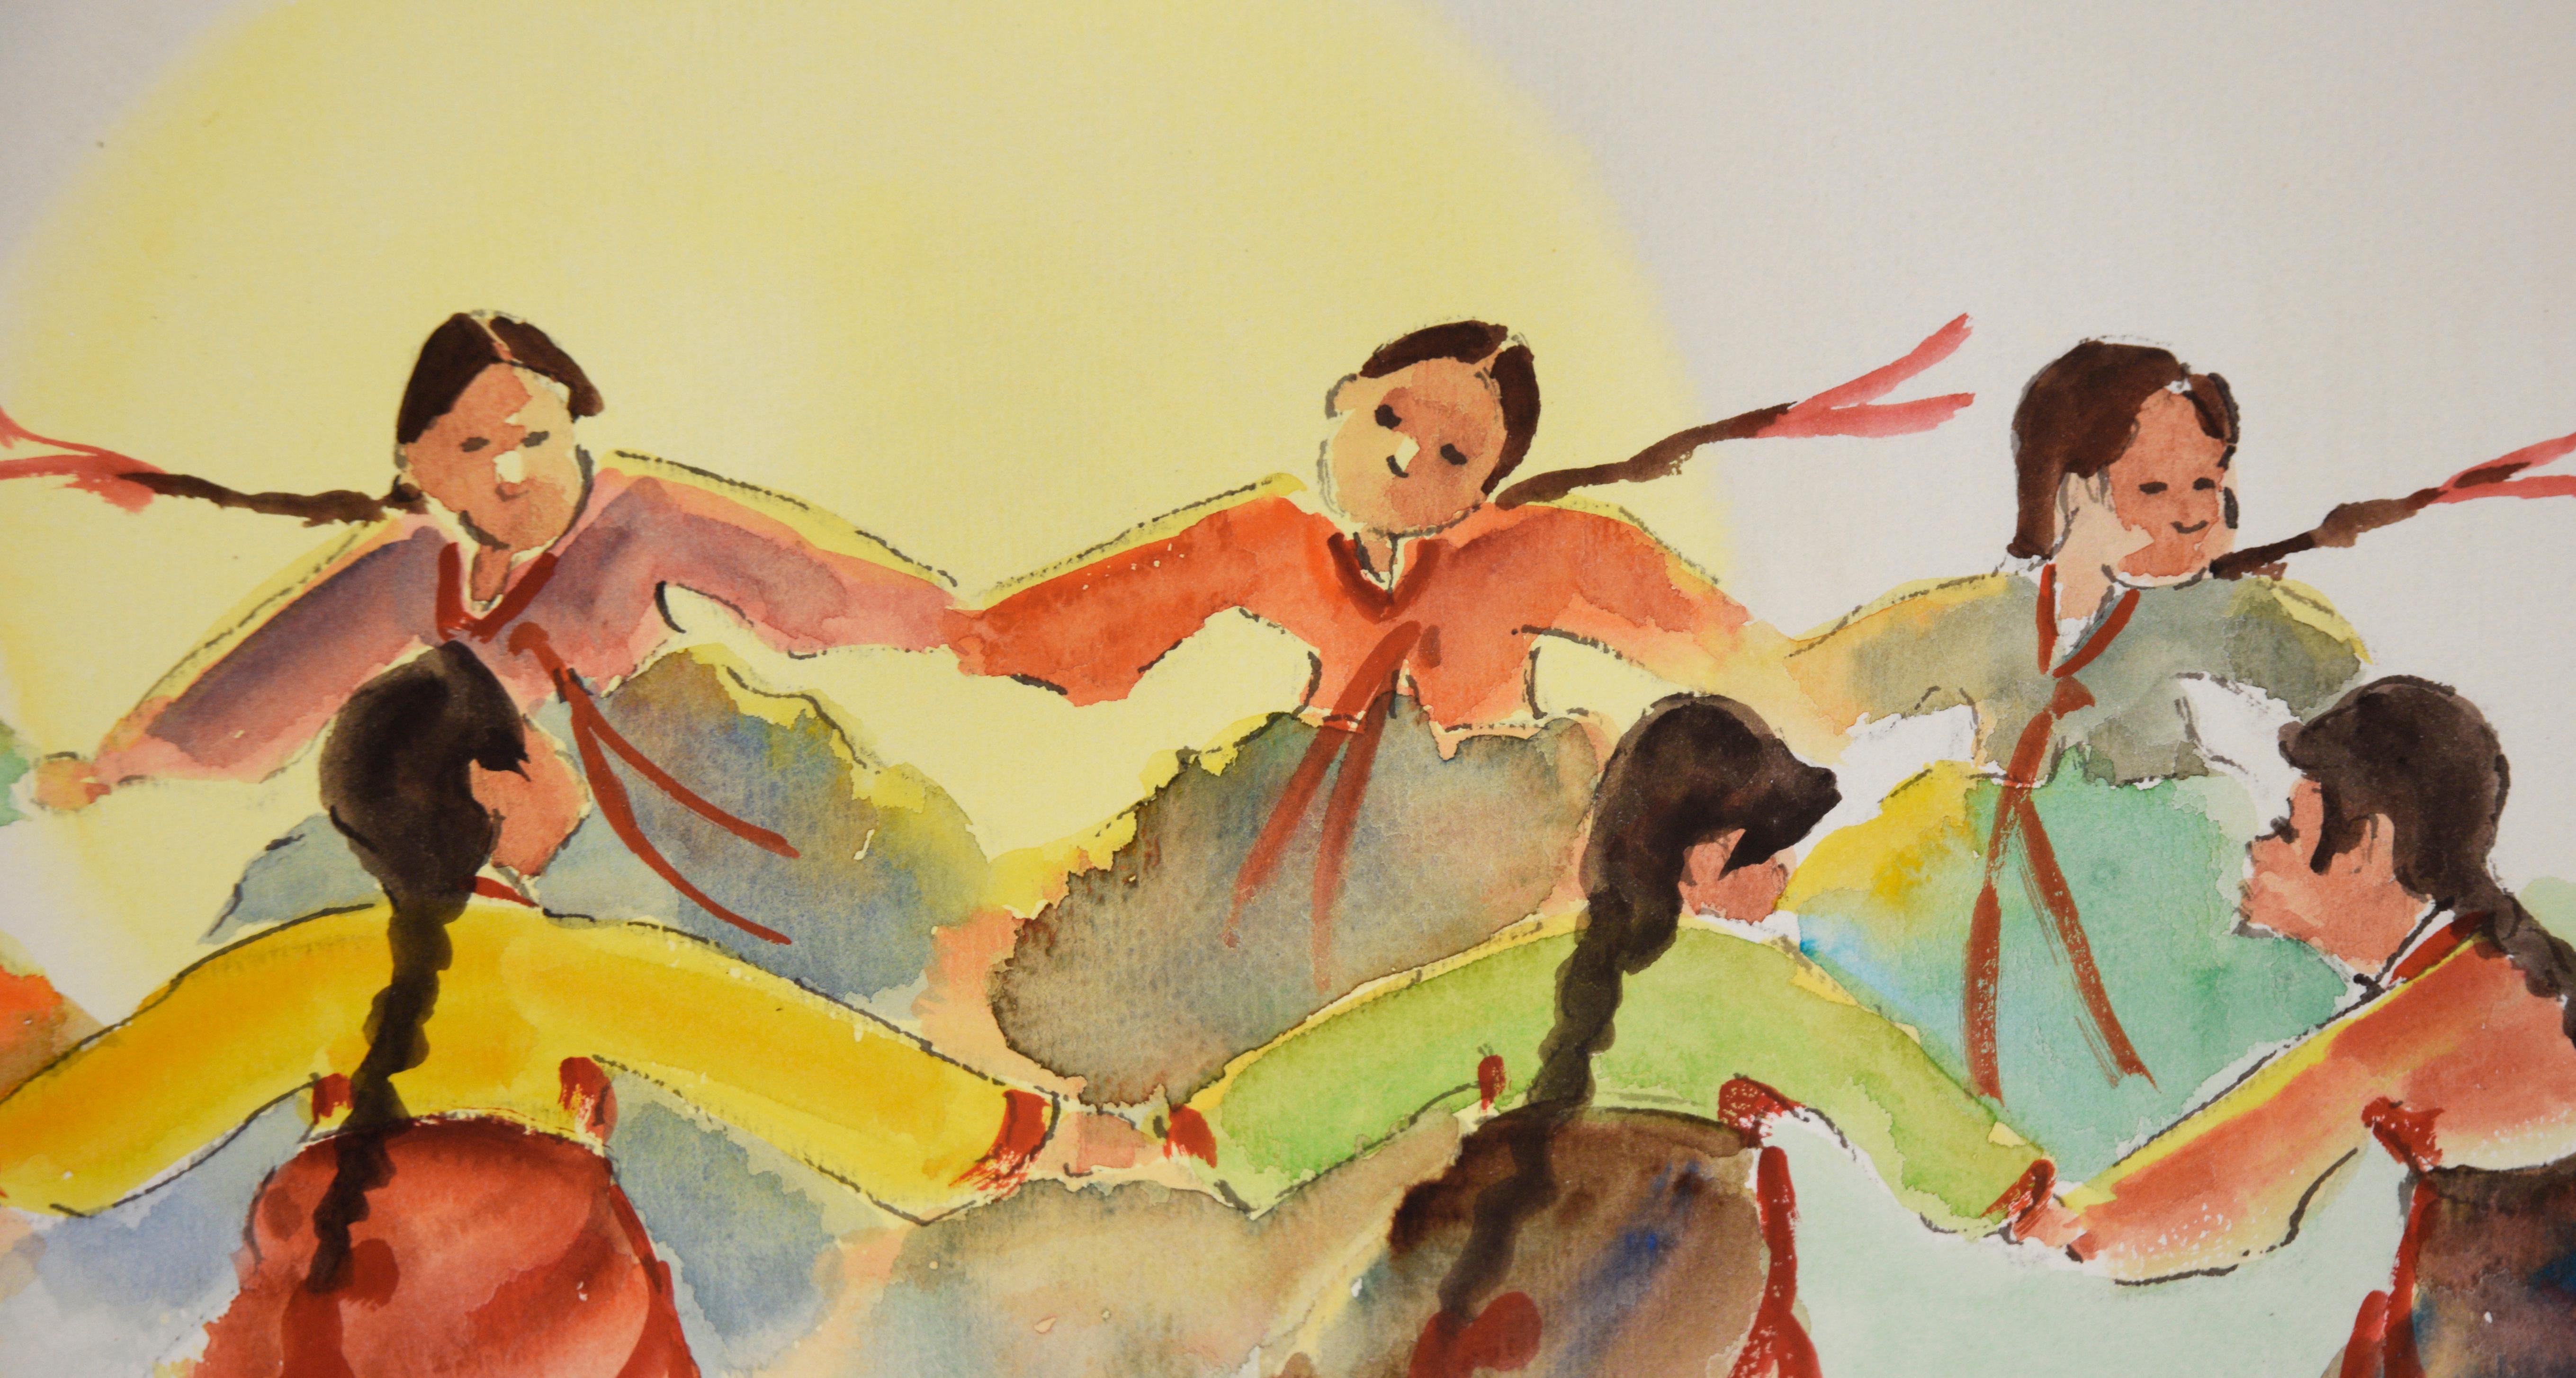 The Dance - Original Watercolor on Paper - Korean Folk Art - Brown Figurative Art by Hoe Won